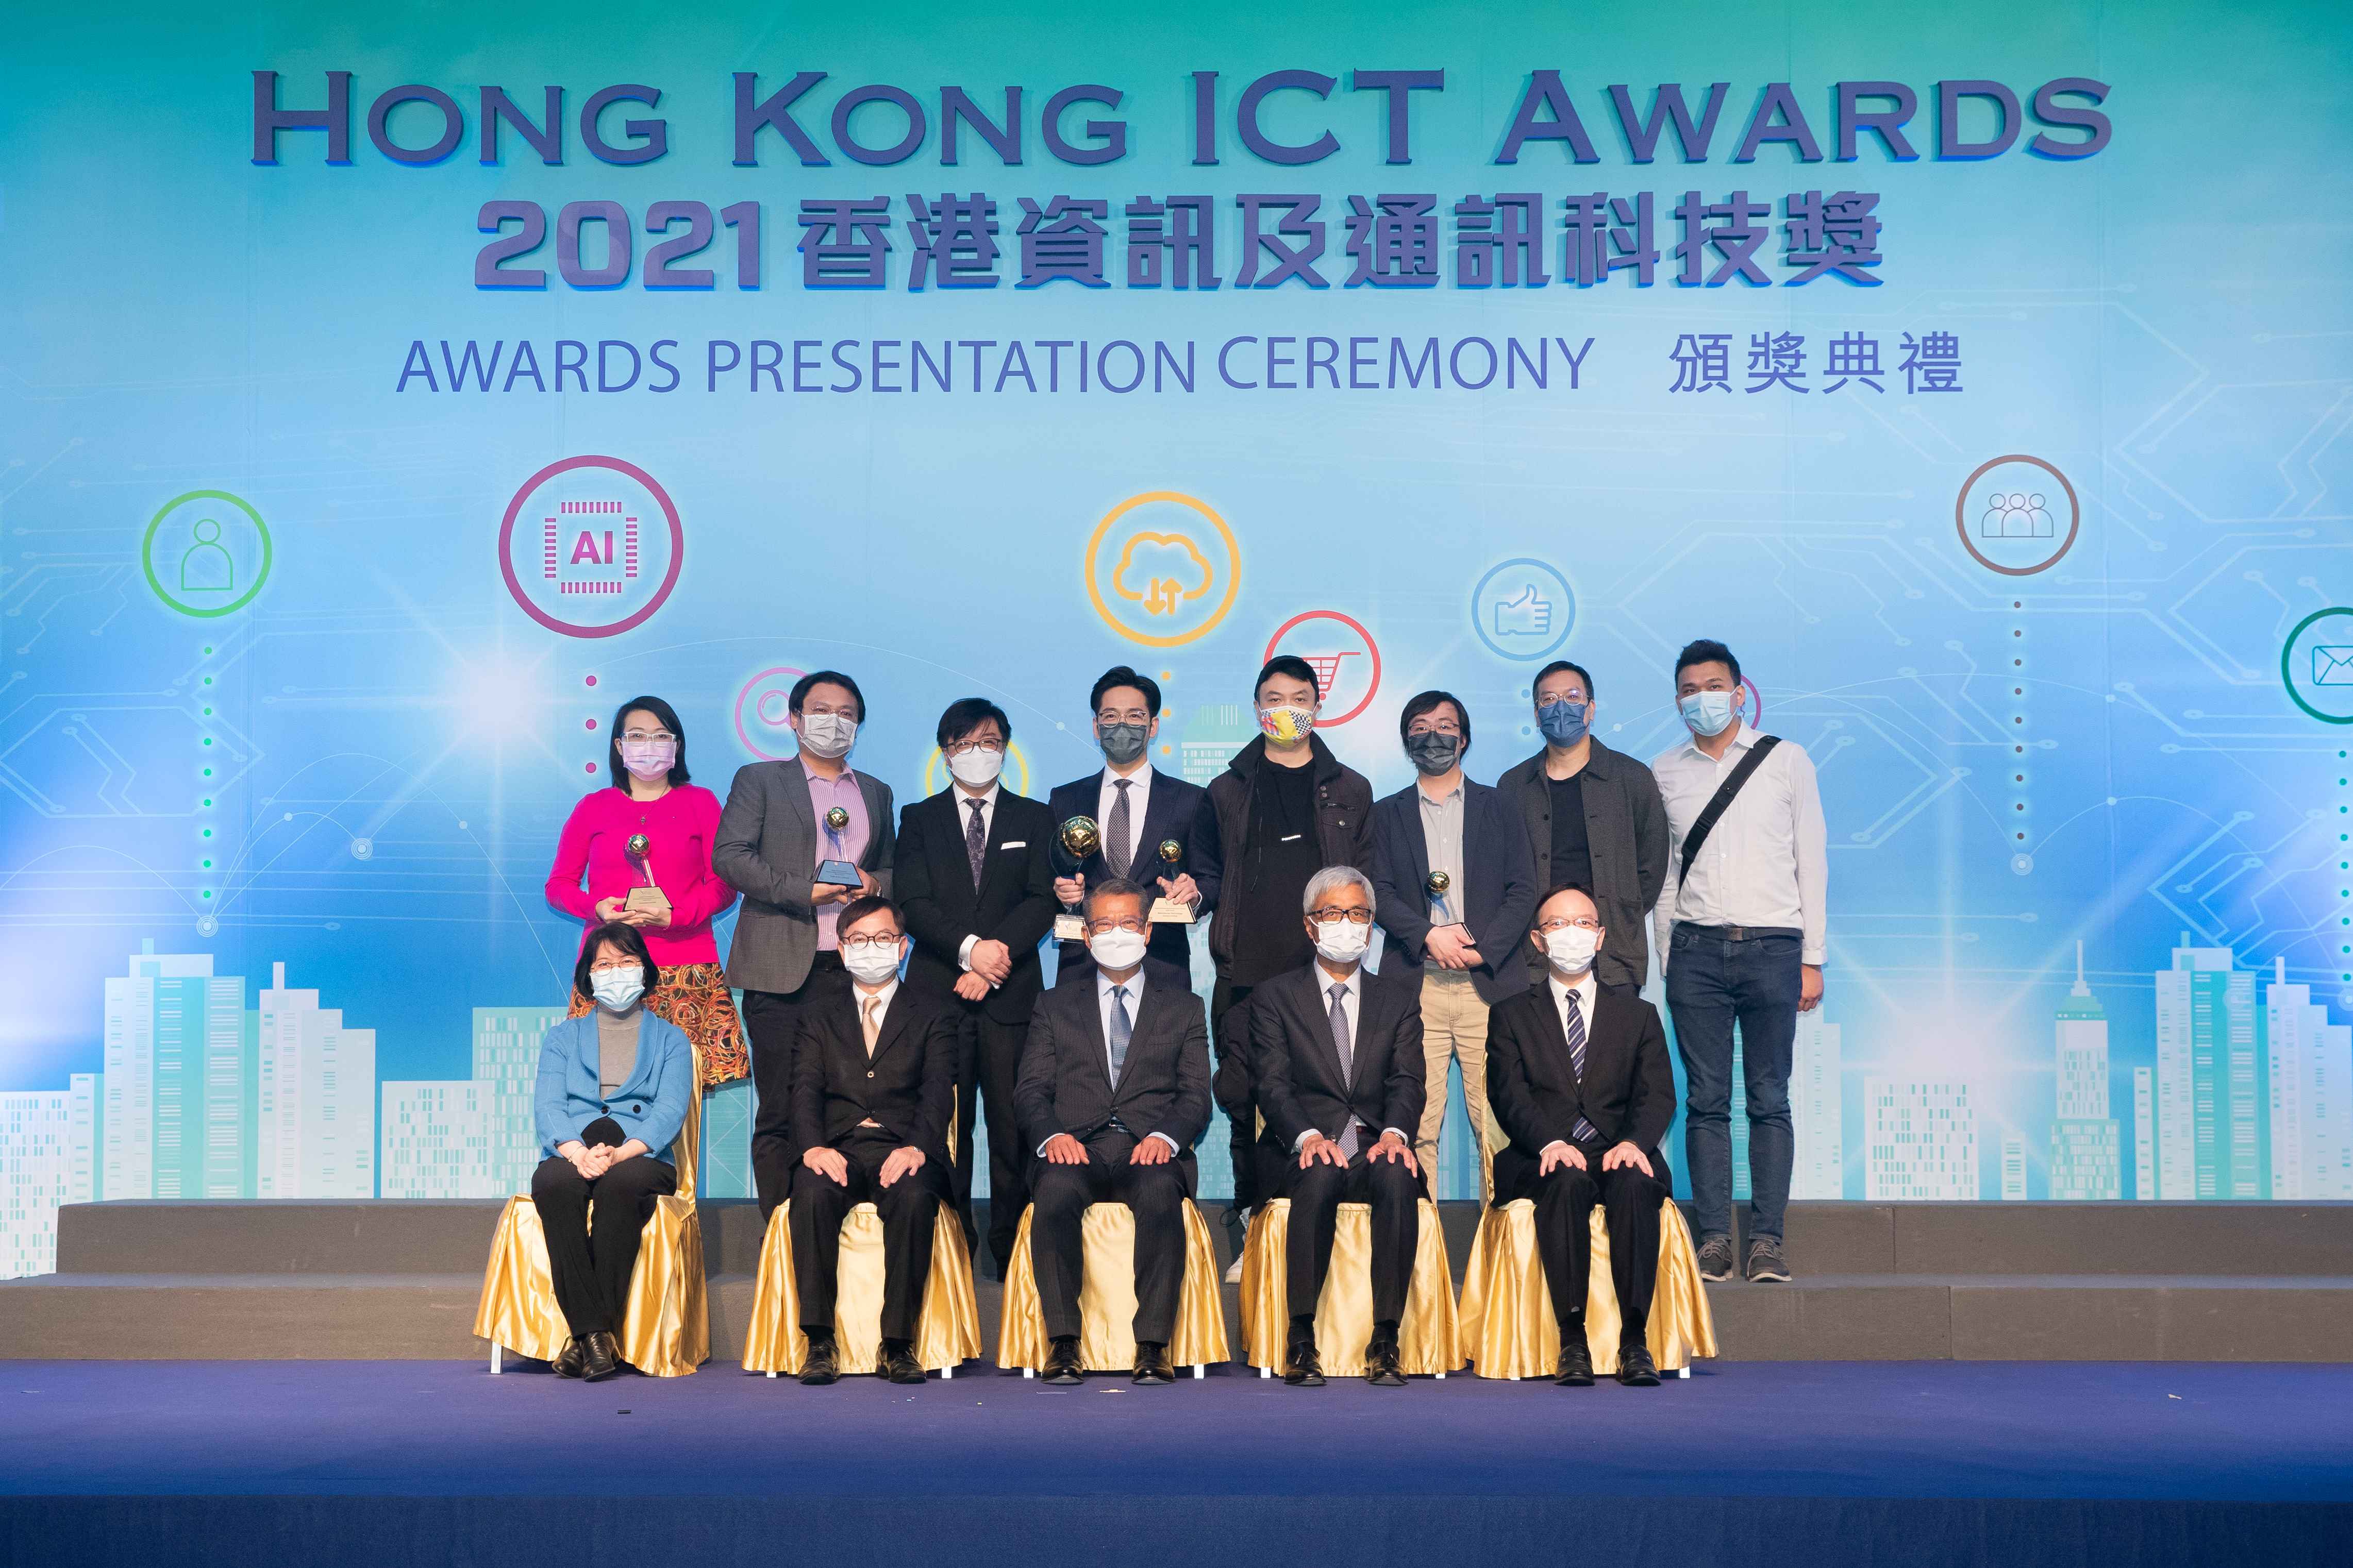 Hong Kong ICT Awards 2021 Digital Entertainment Award Winners Group Photo